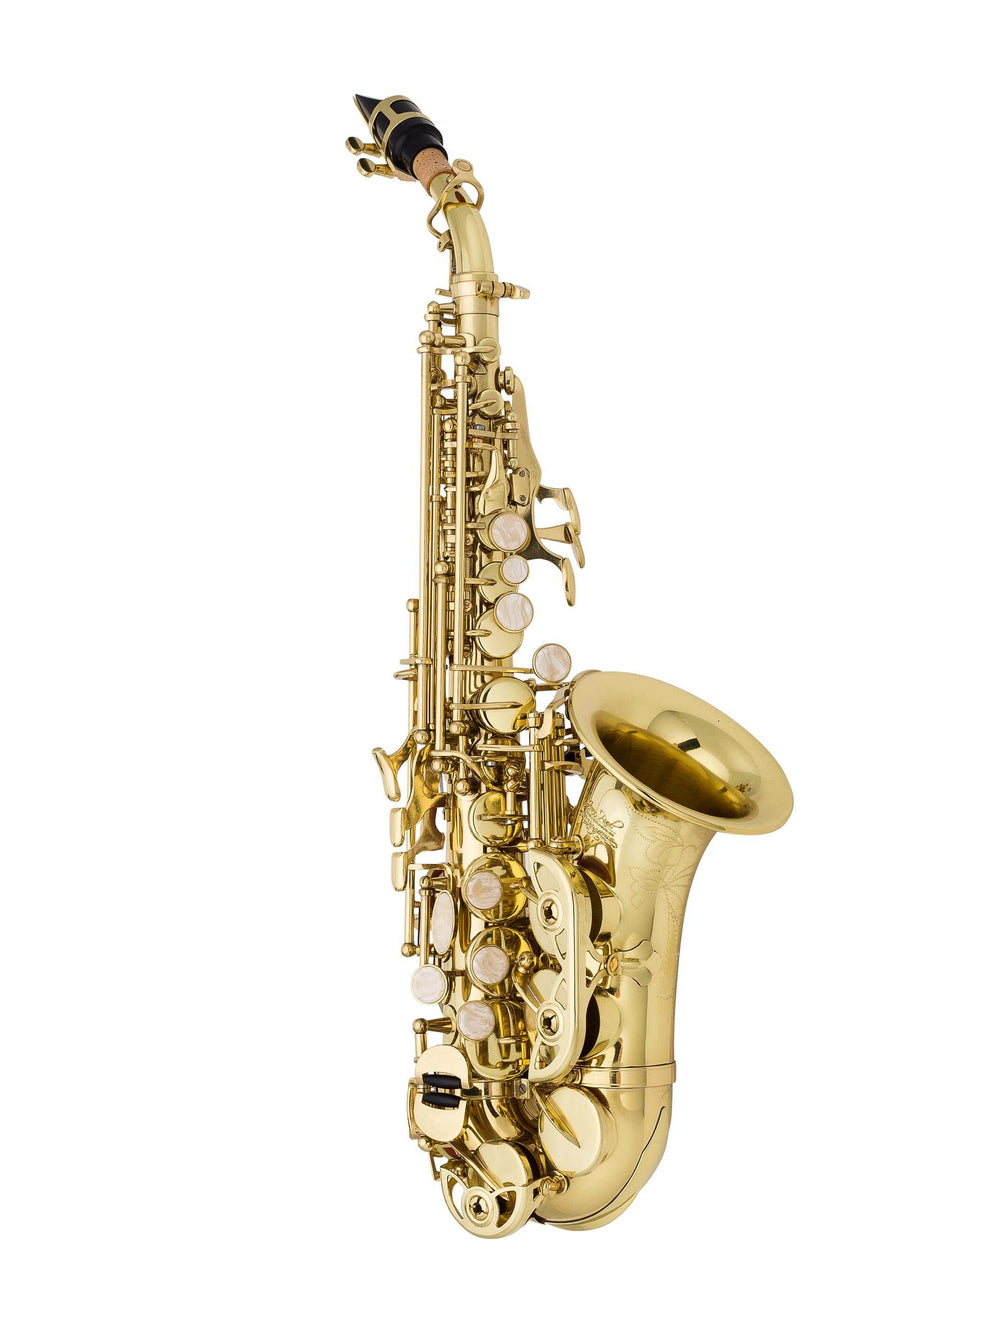 SAX - The World's Leading Saxophone Shop